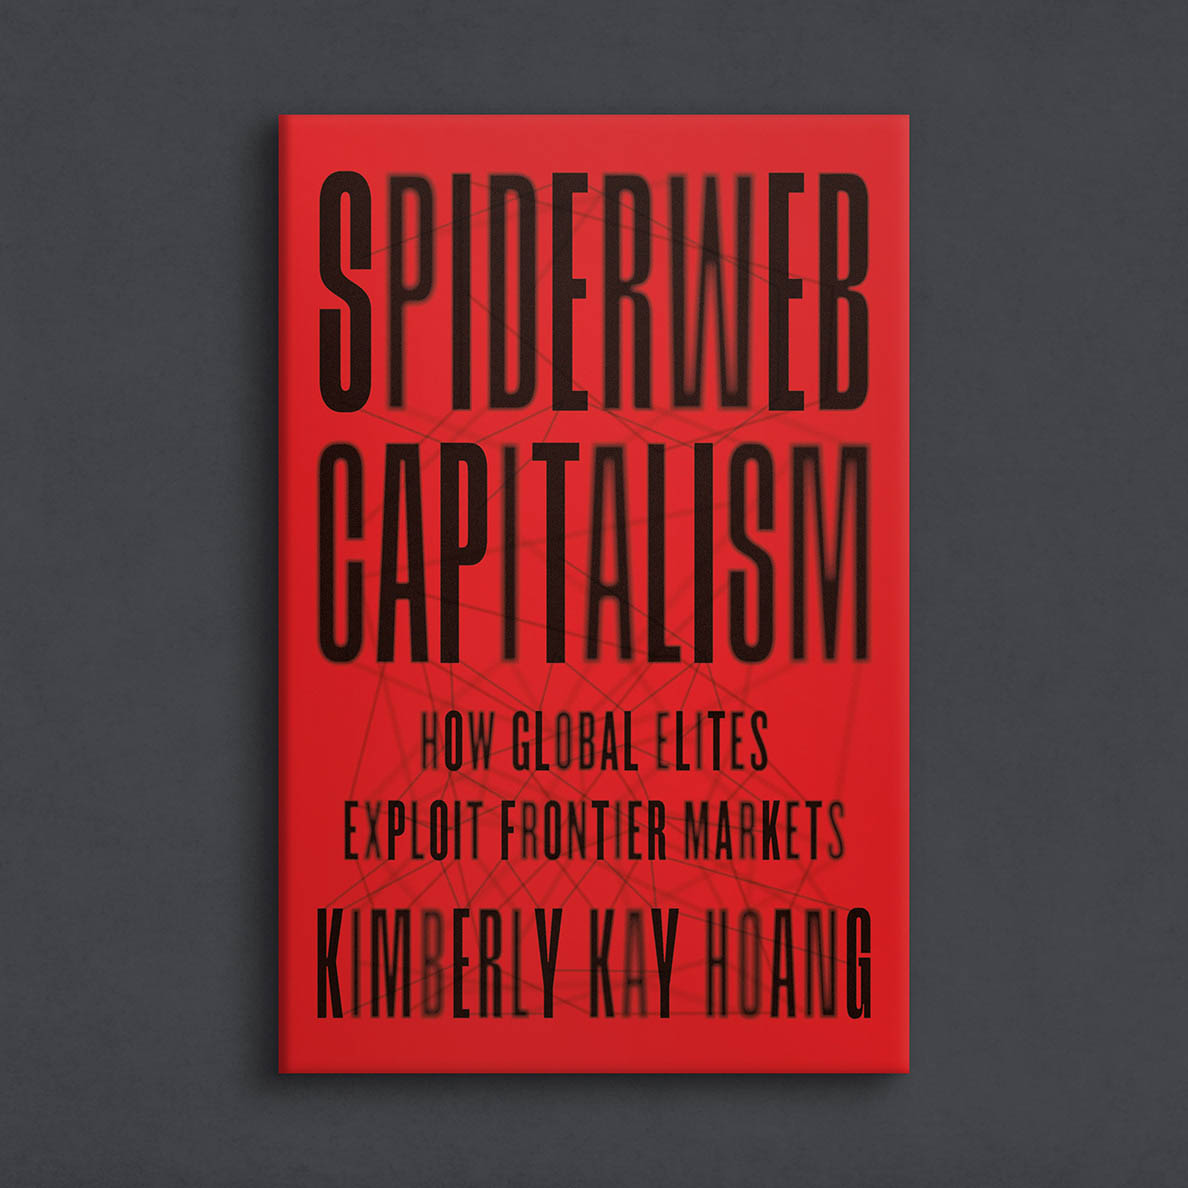 Spiderweb Capitalism book cover